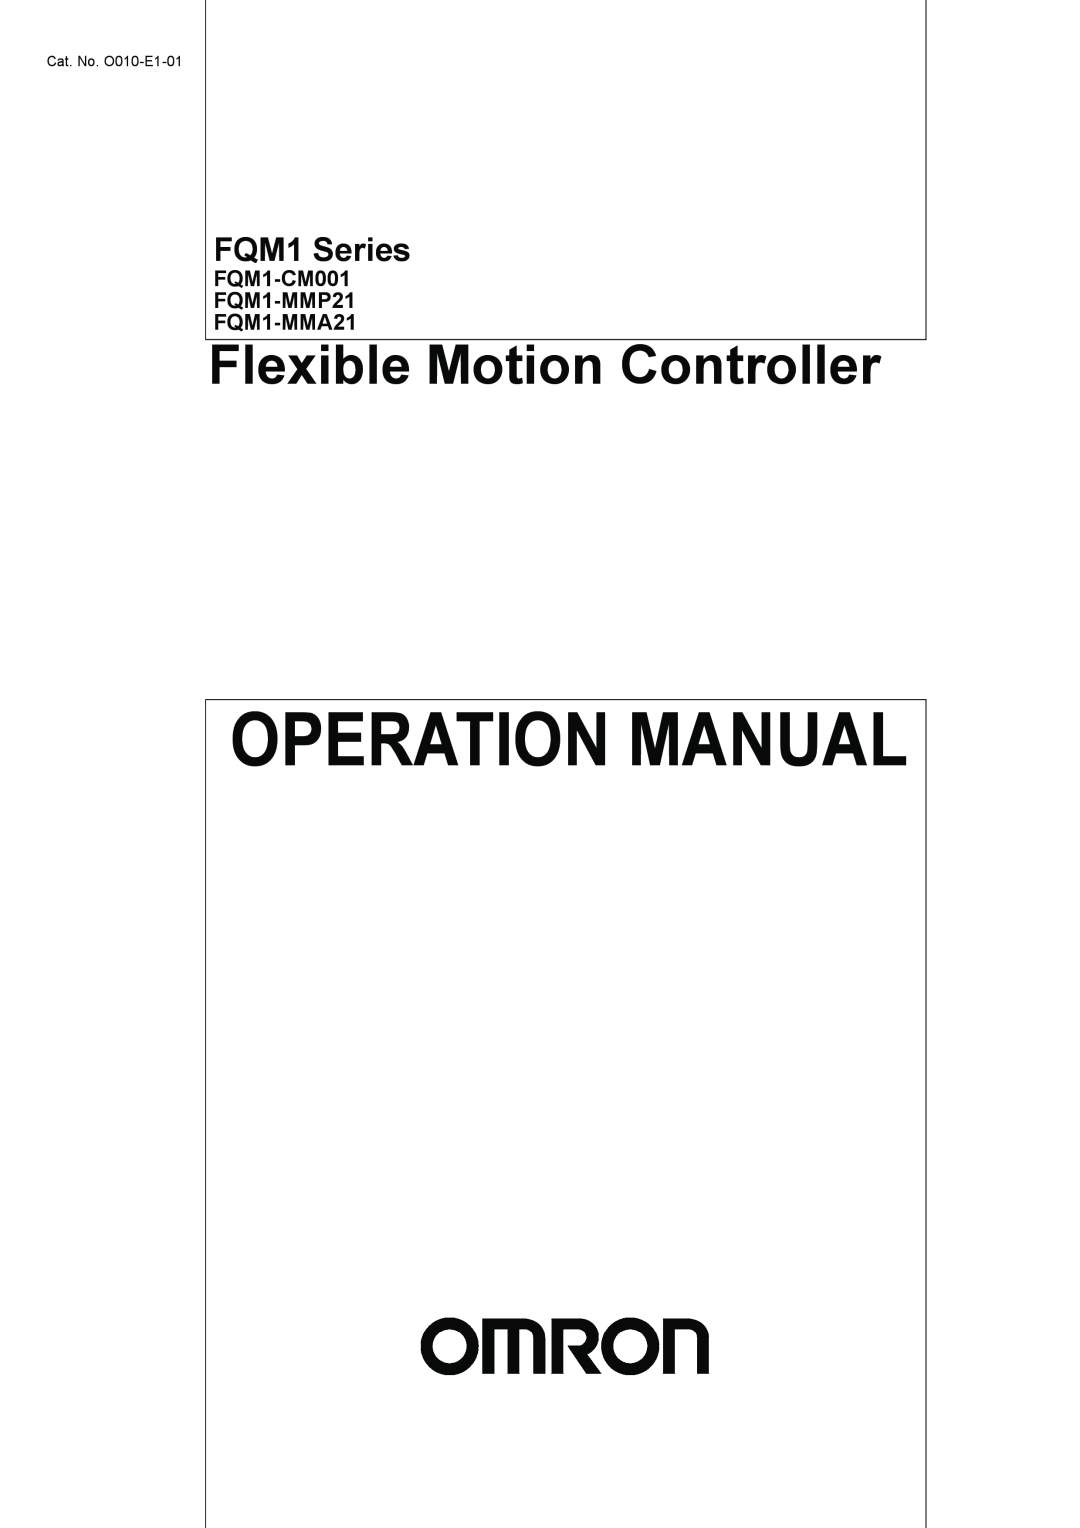 Omron FQM1-MMA21, FQM1-CM001, FQM1-MMP21 operation manual FQM1 Series, Operation Manual, Flexible Motion Controller 